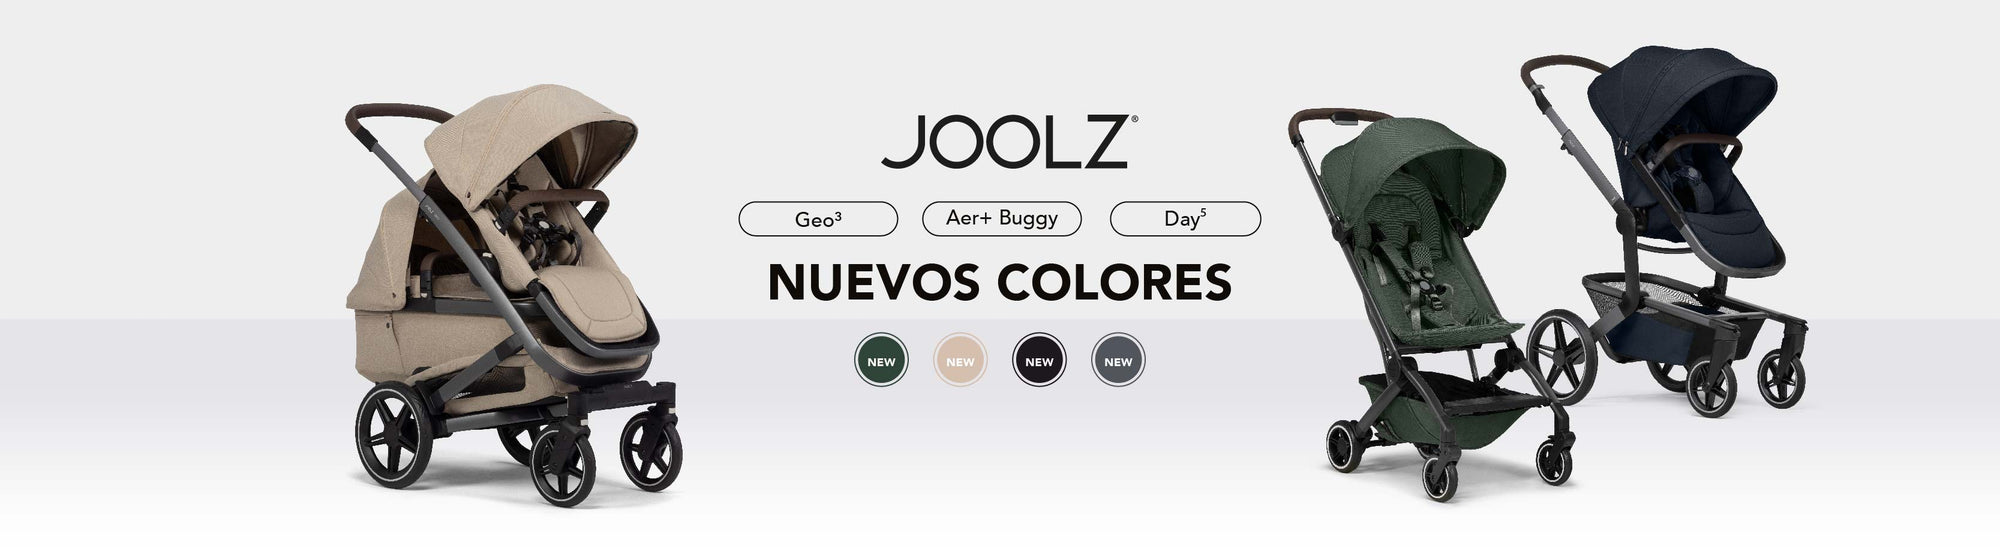 Joolz New Colors